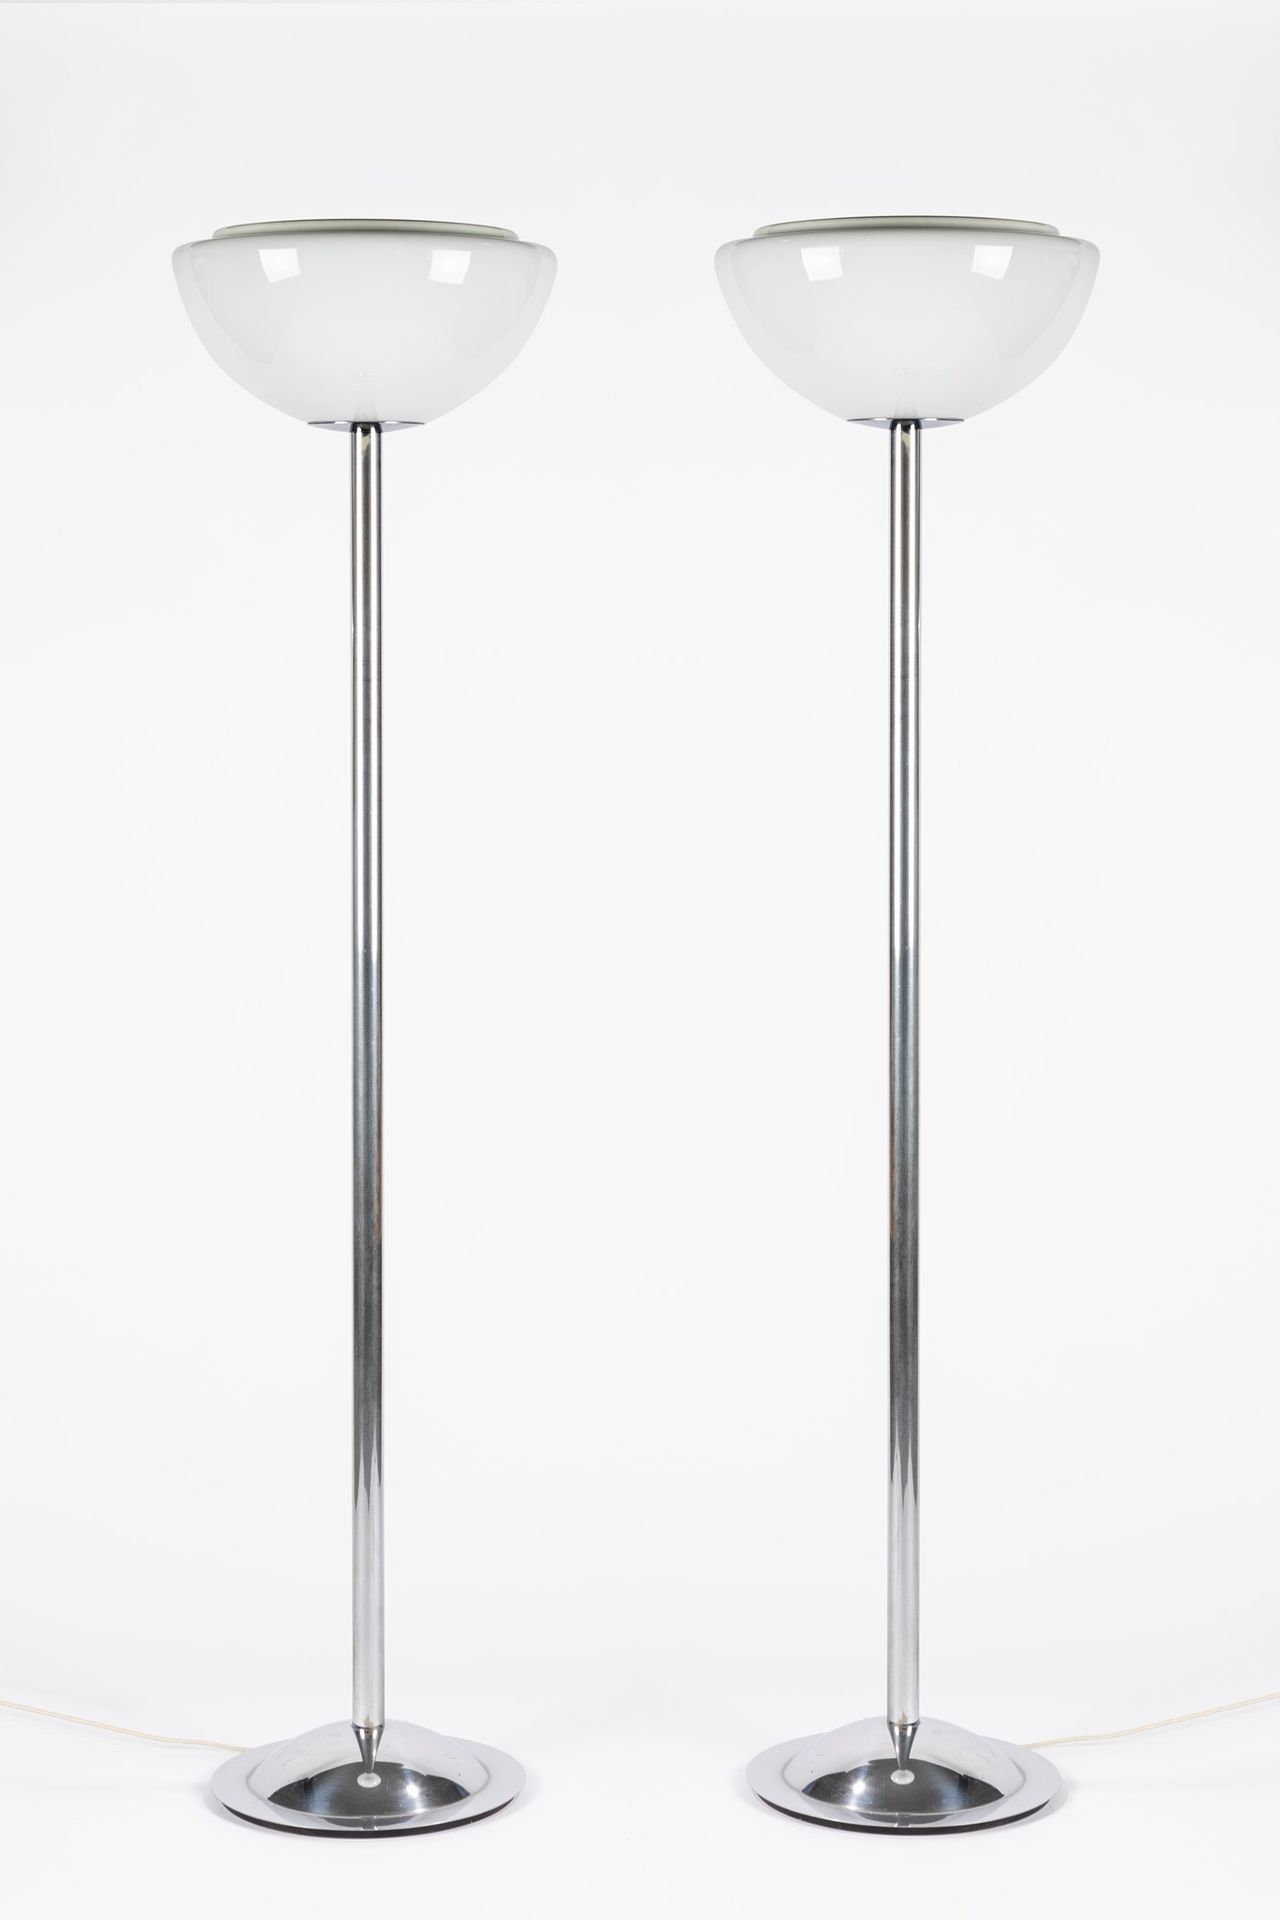 Manifattura Italiana Deux lampadaires, 1970 ca.

H 166 x diam 40 cm
structure en&hellip;